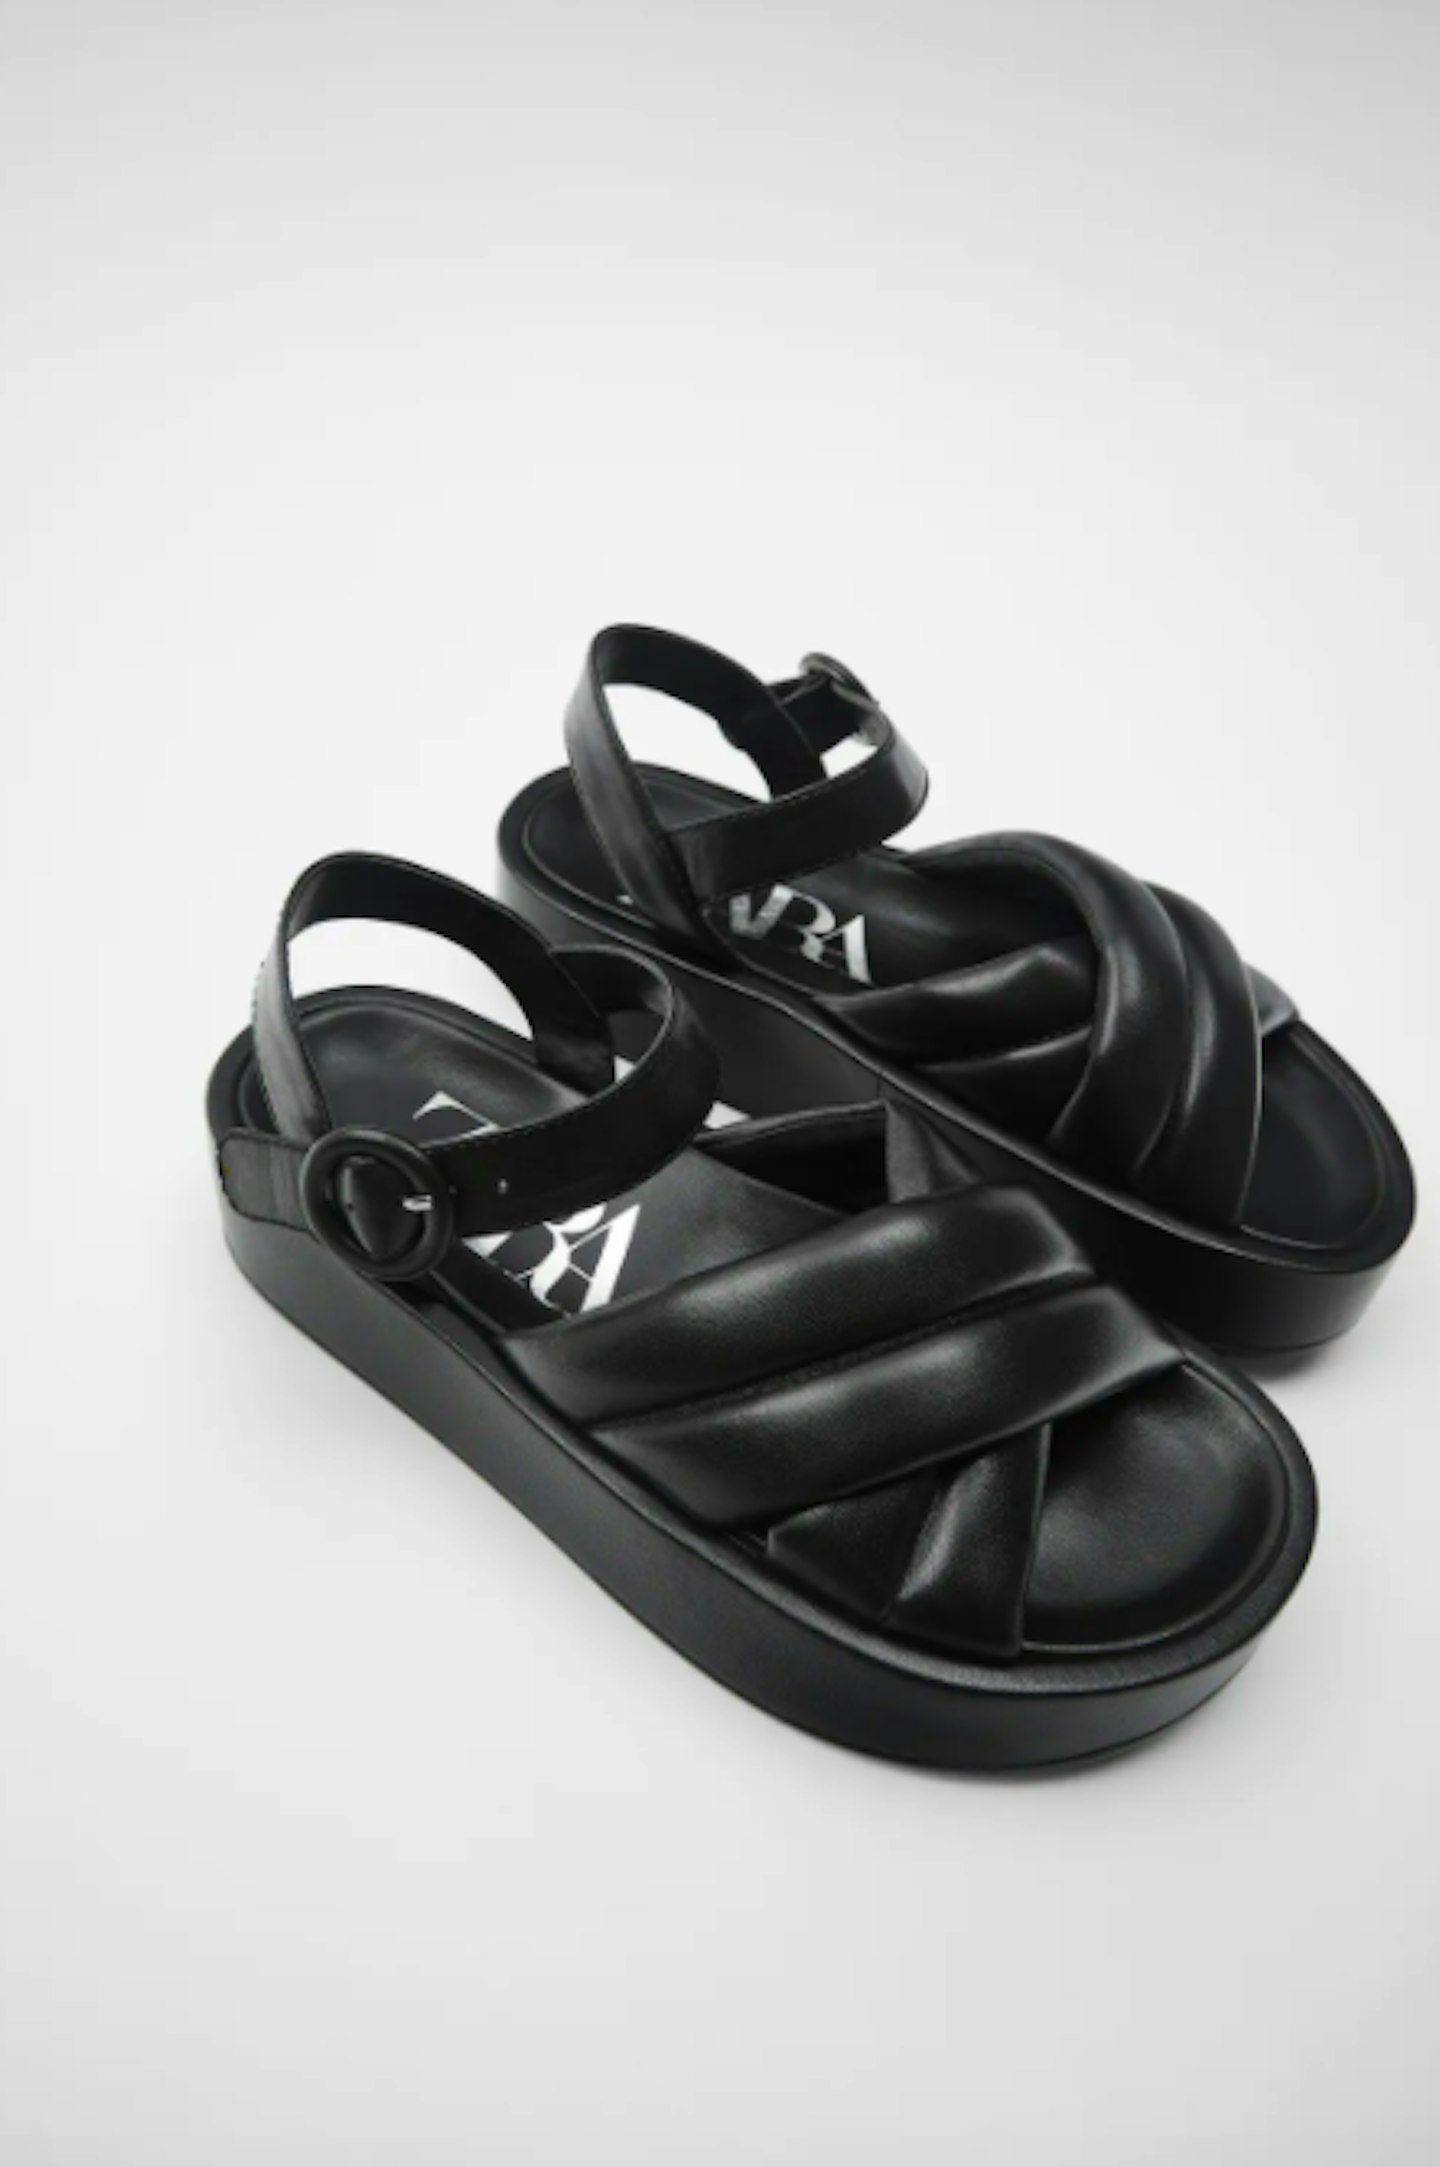 Zara, Padded Leather Sandals, £59.99